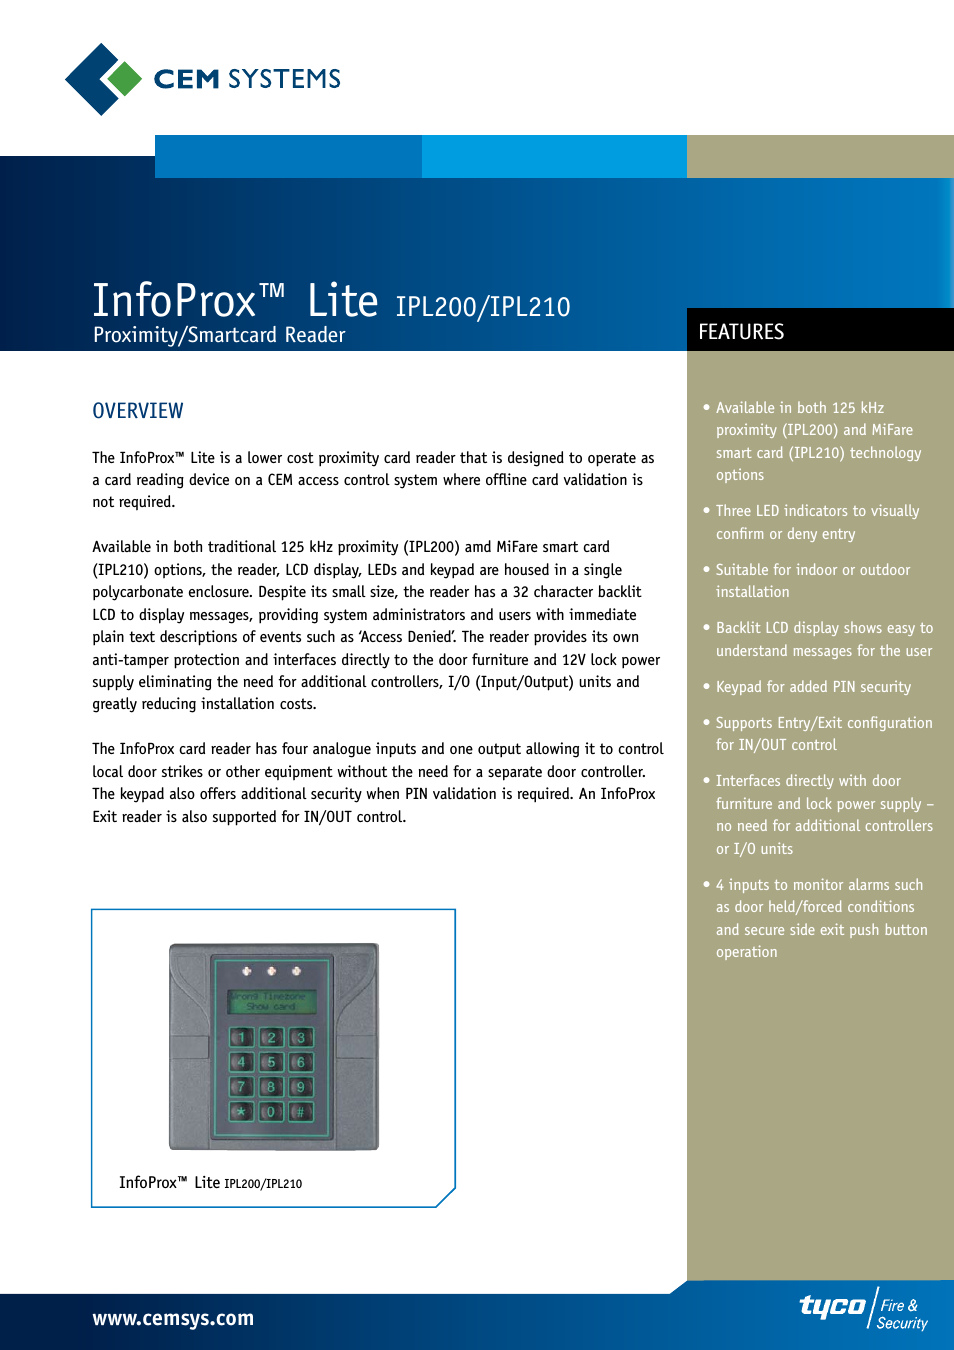 InfoProx Lite IPL210